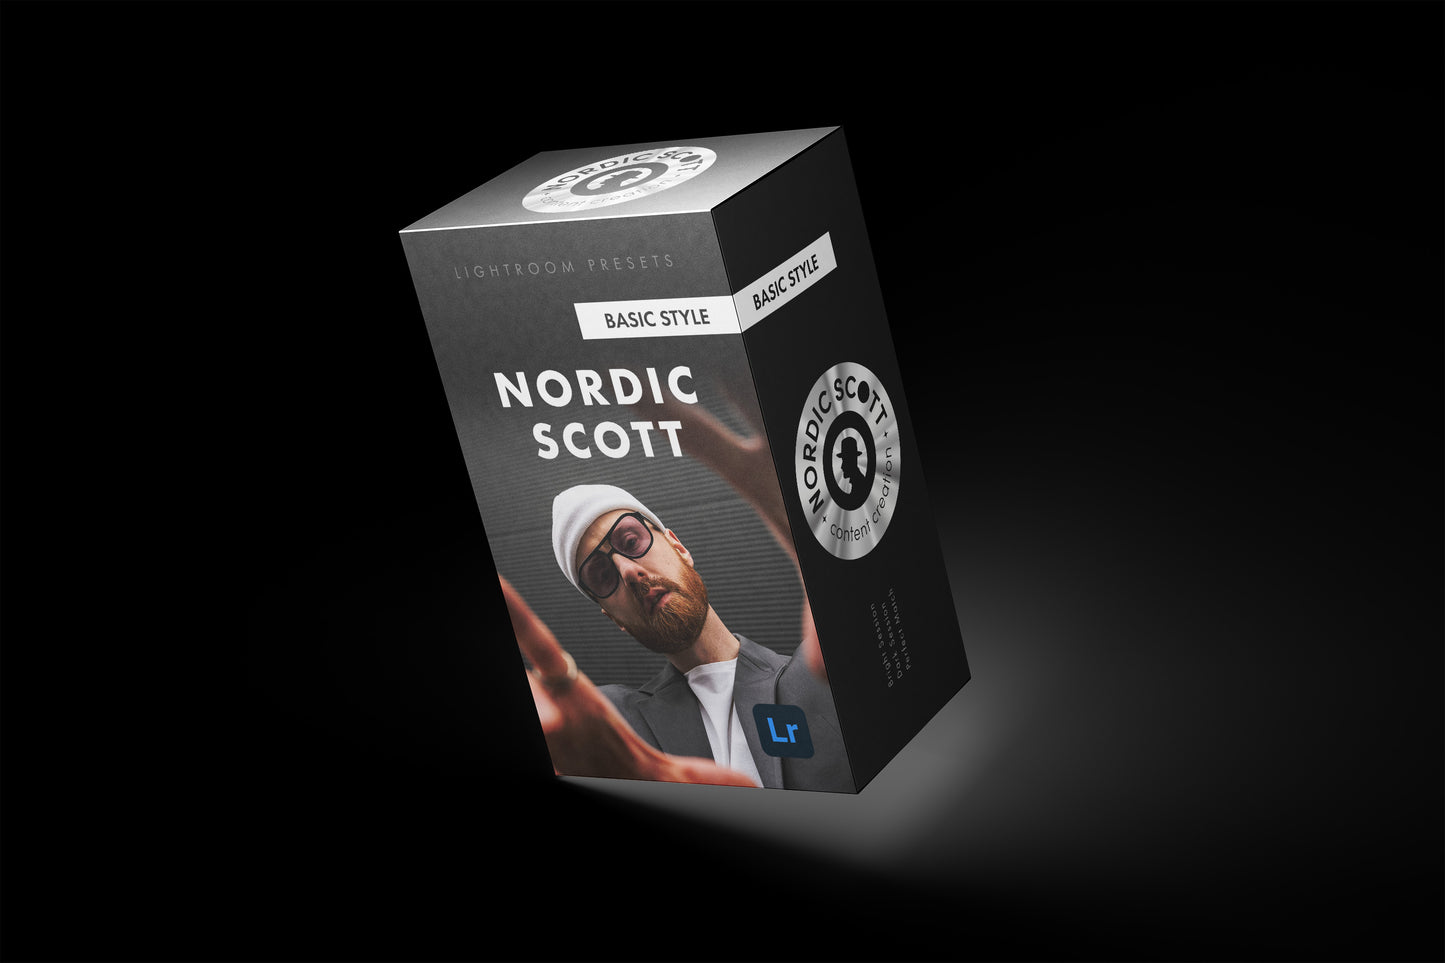 Nordic Scott – Basic Style